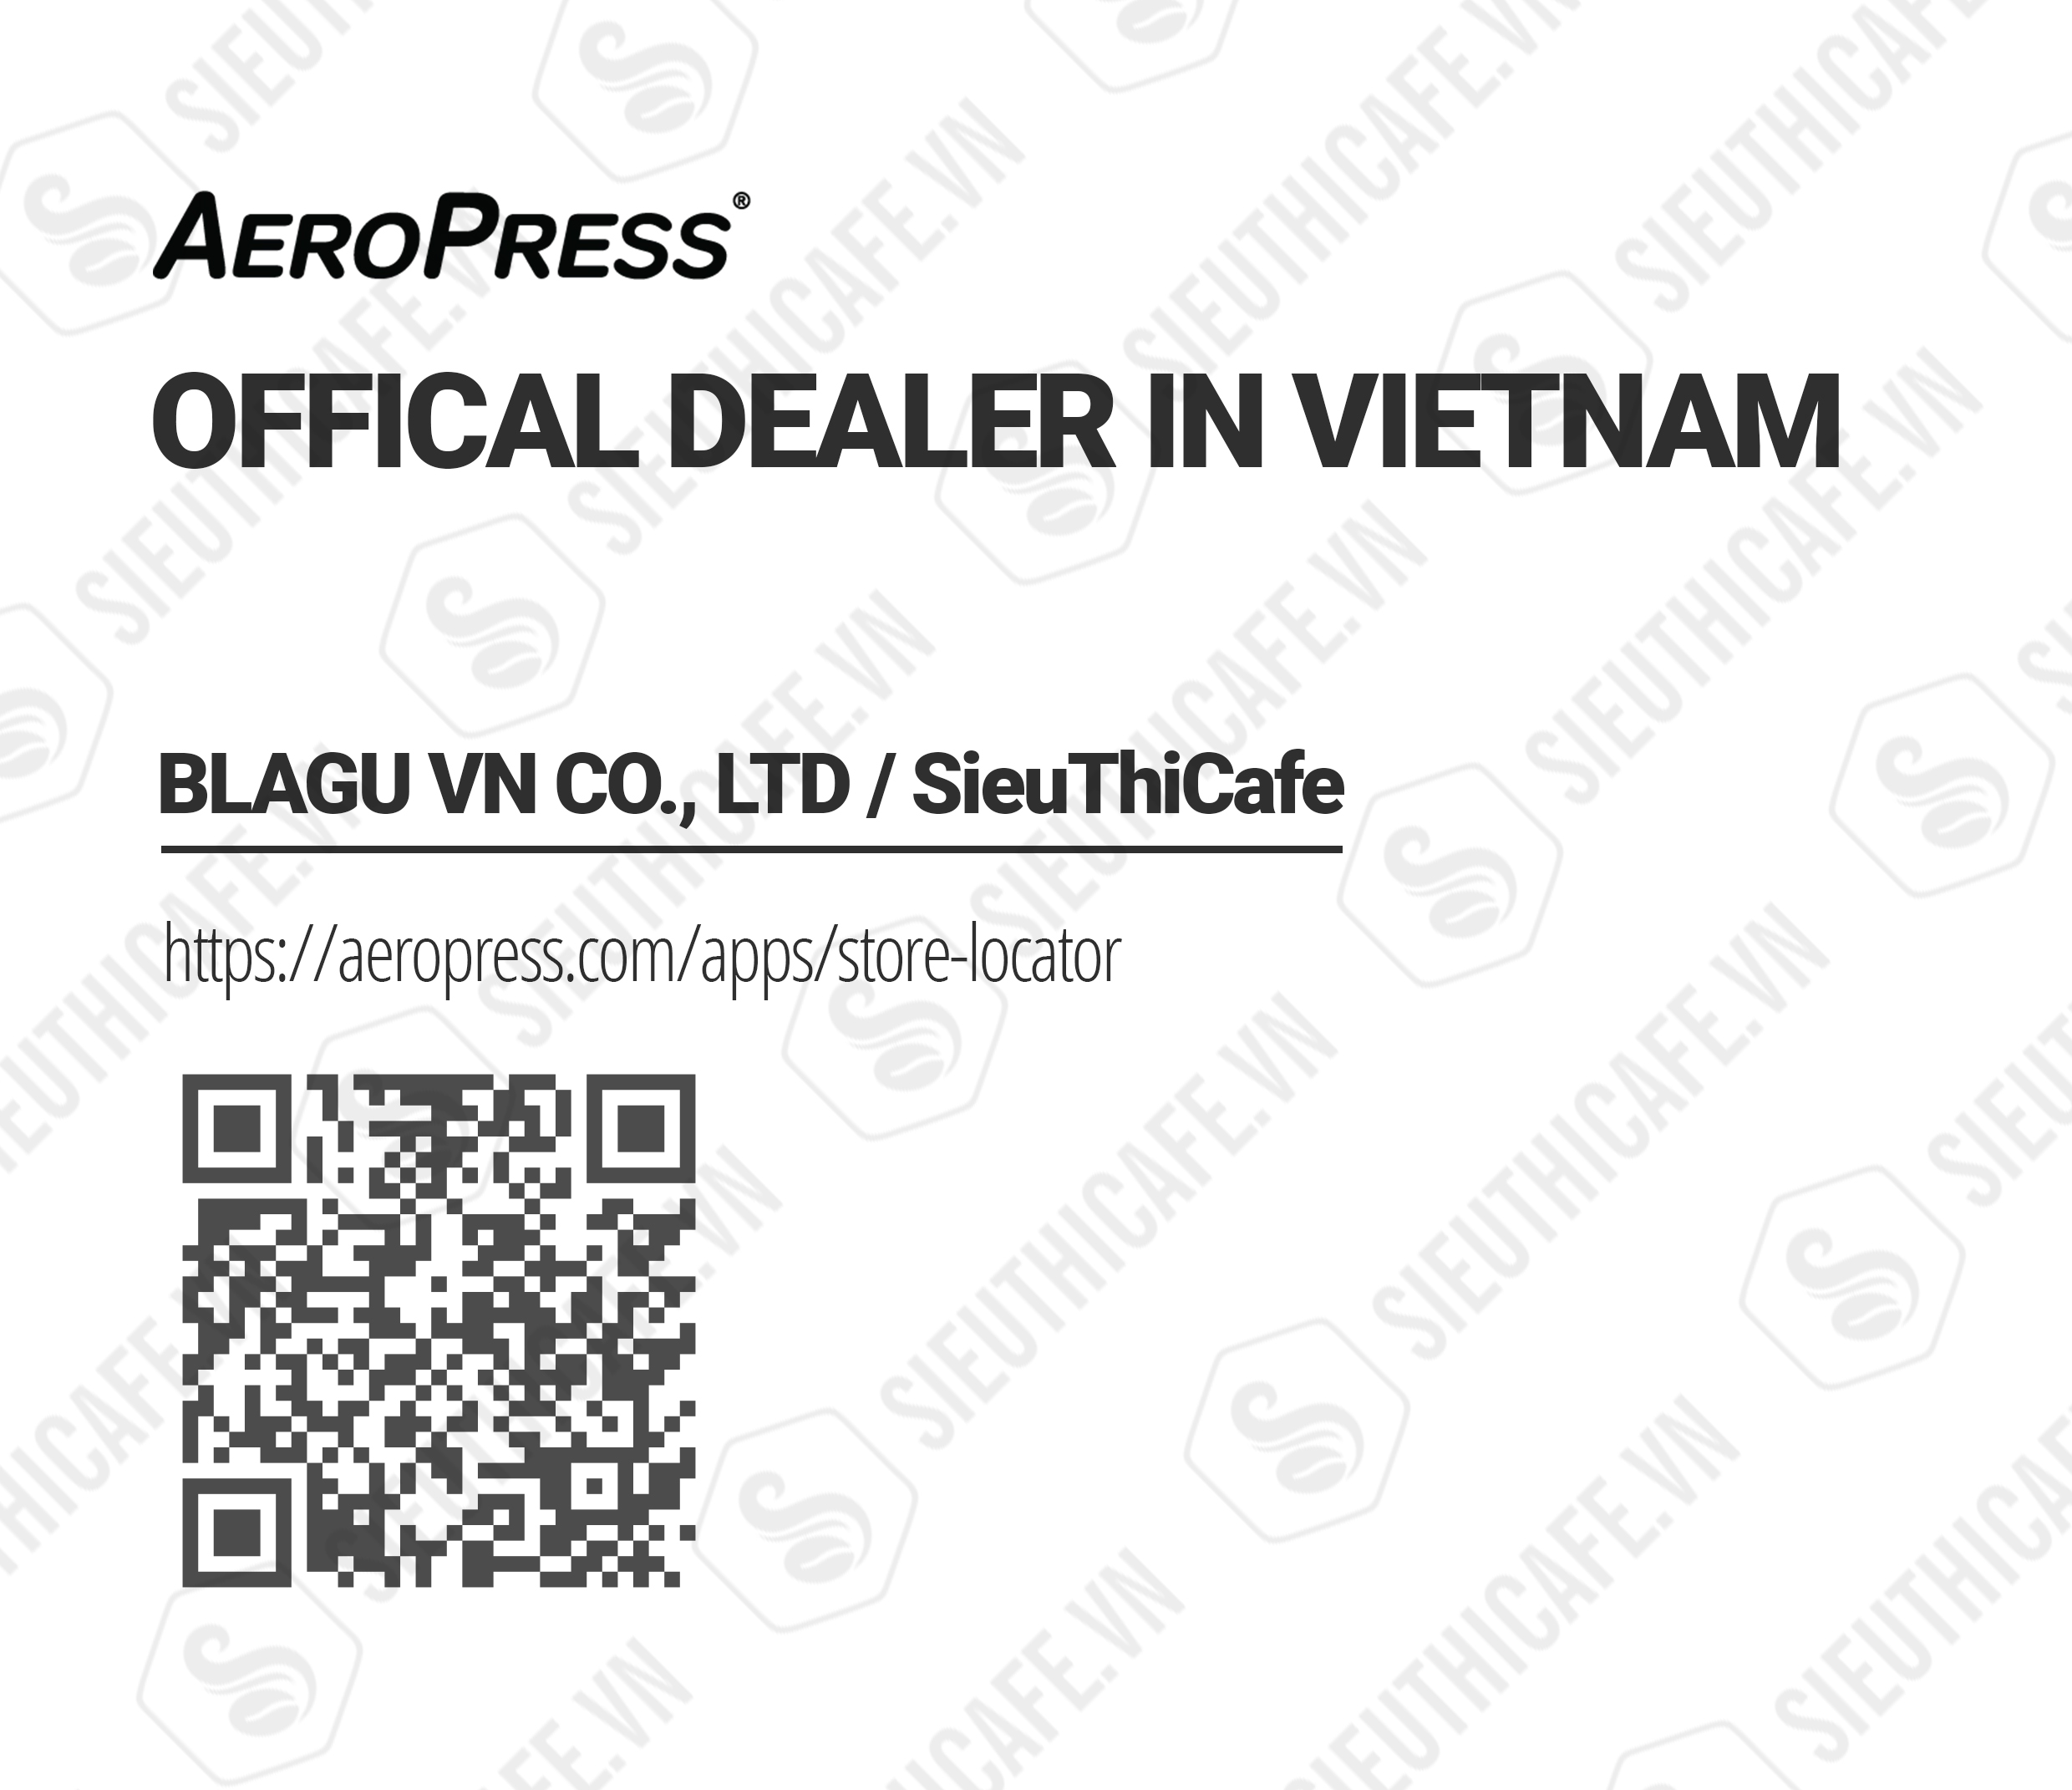 offical DEALER IN vietnam aeropress.jpg